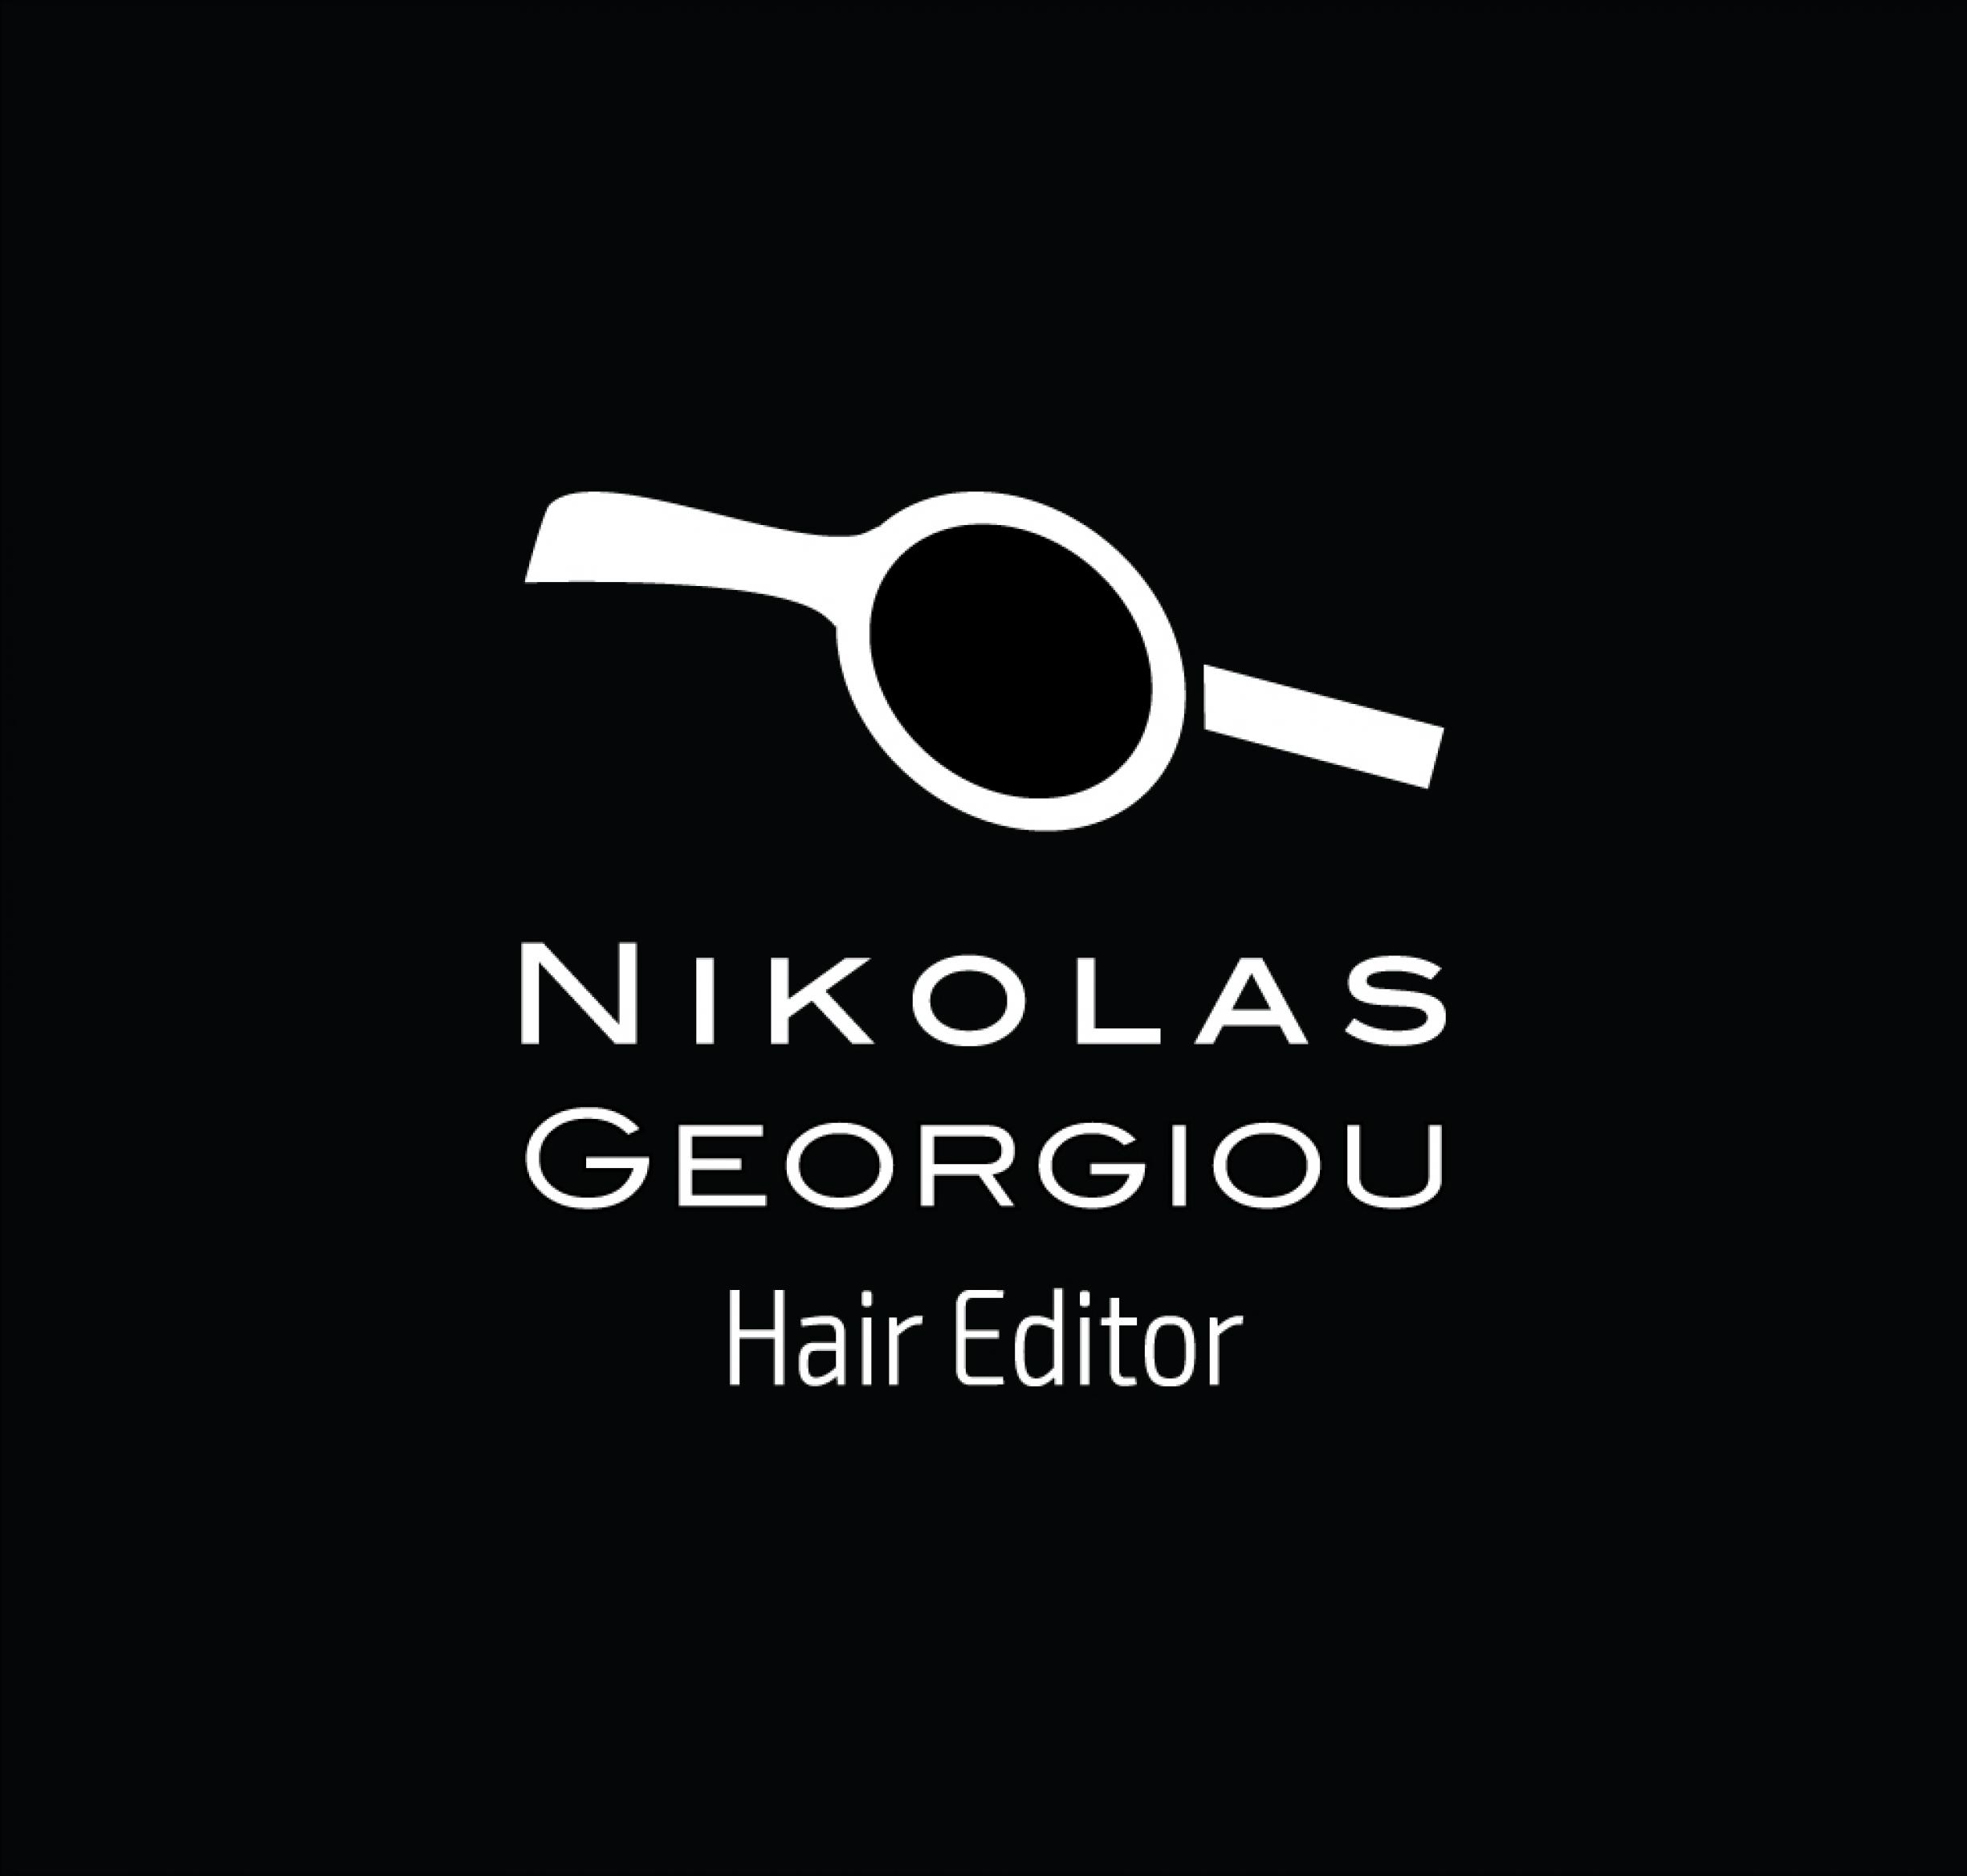 Nikolas Georgiou Hair Editor Logo